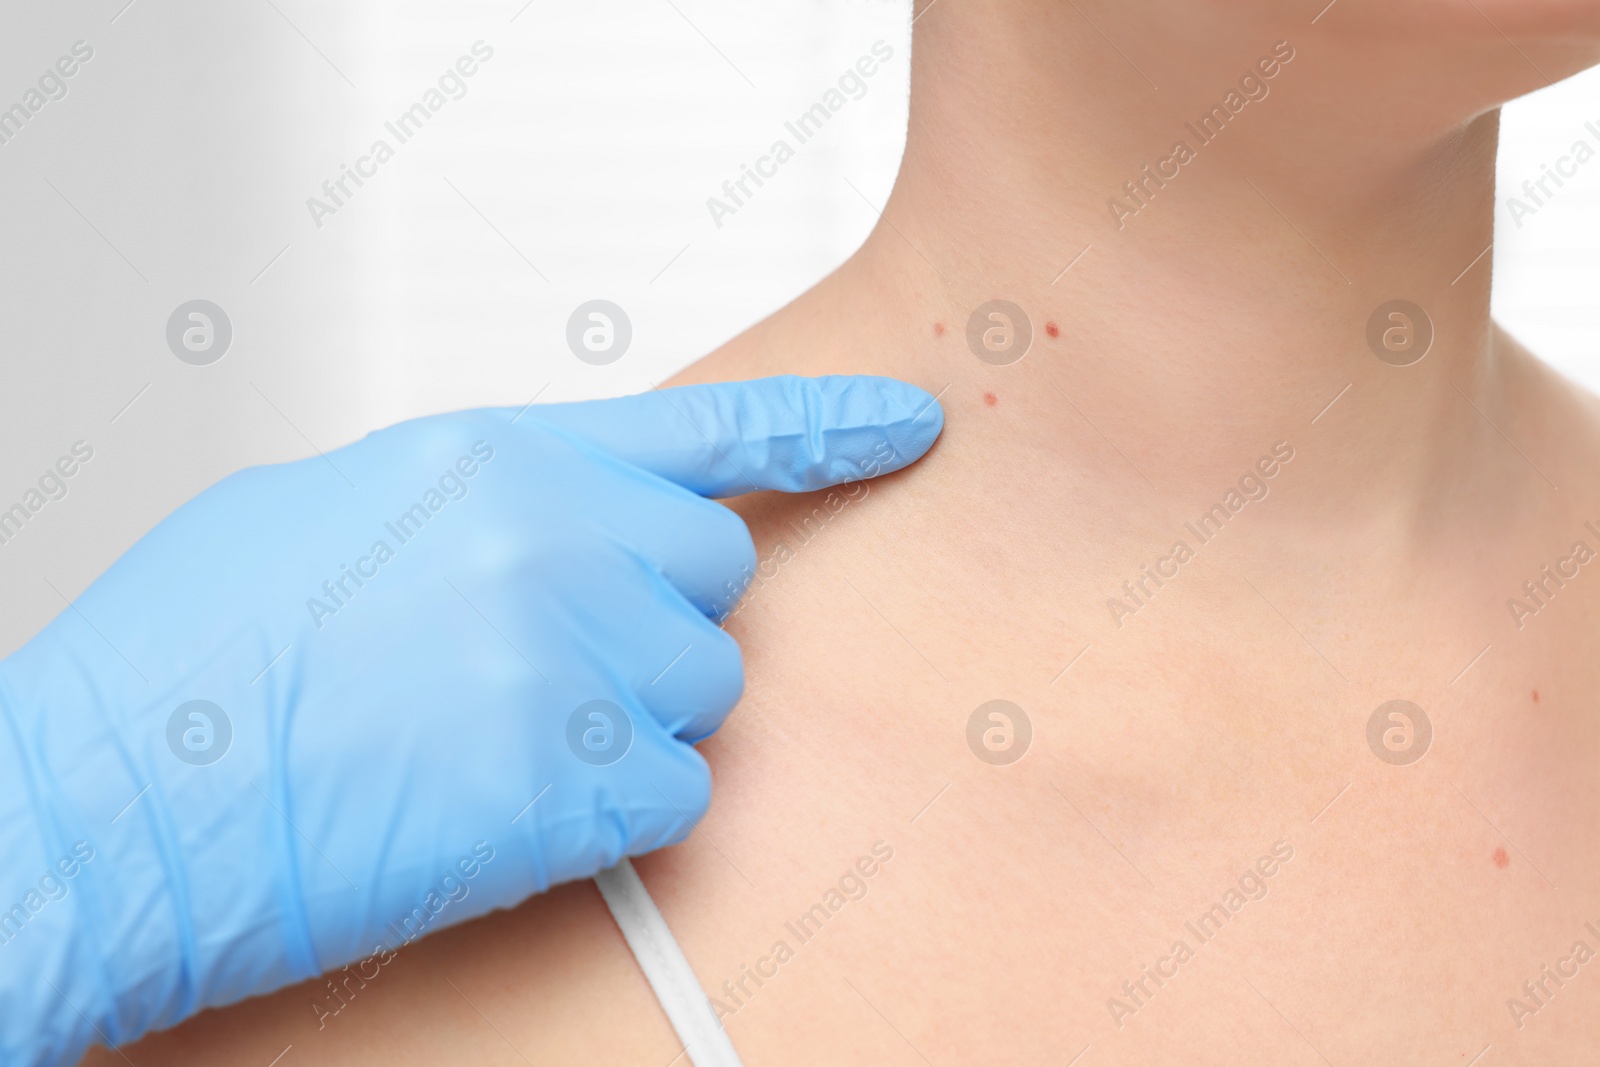 Photo of Dermatologist in rubber glove examining patient's birthmark on blurred background, closeup